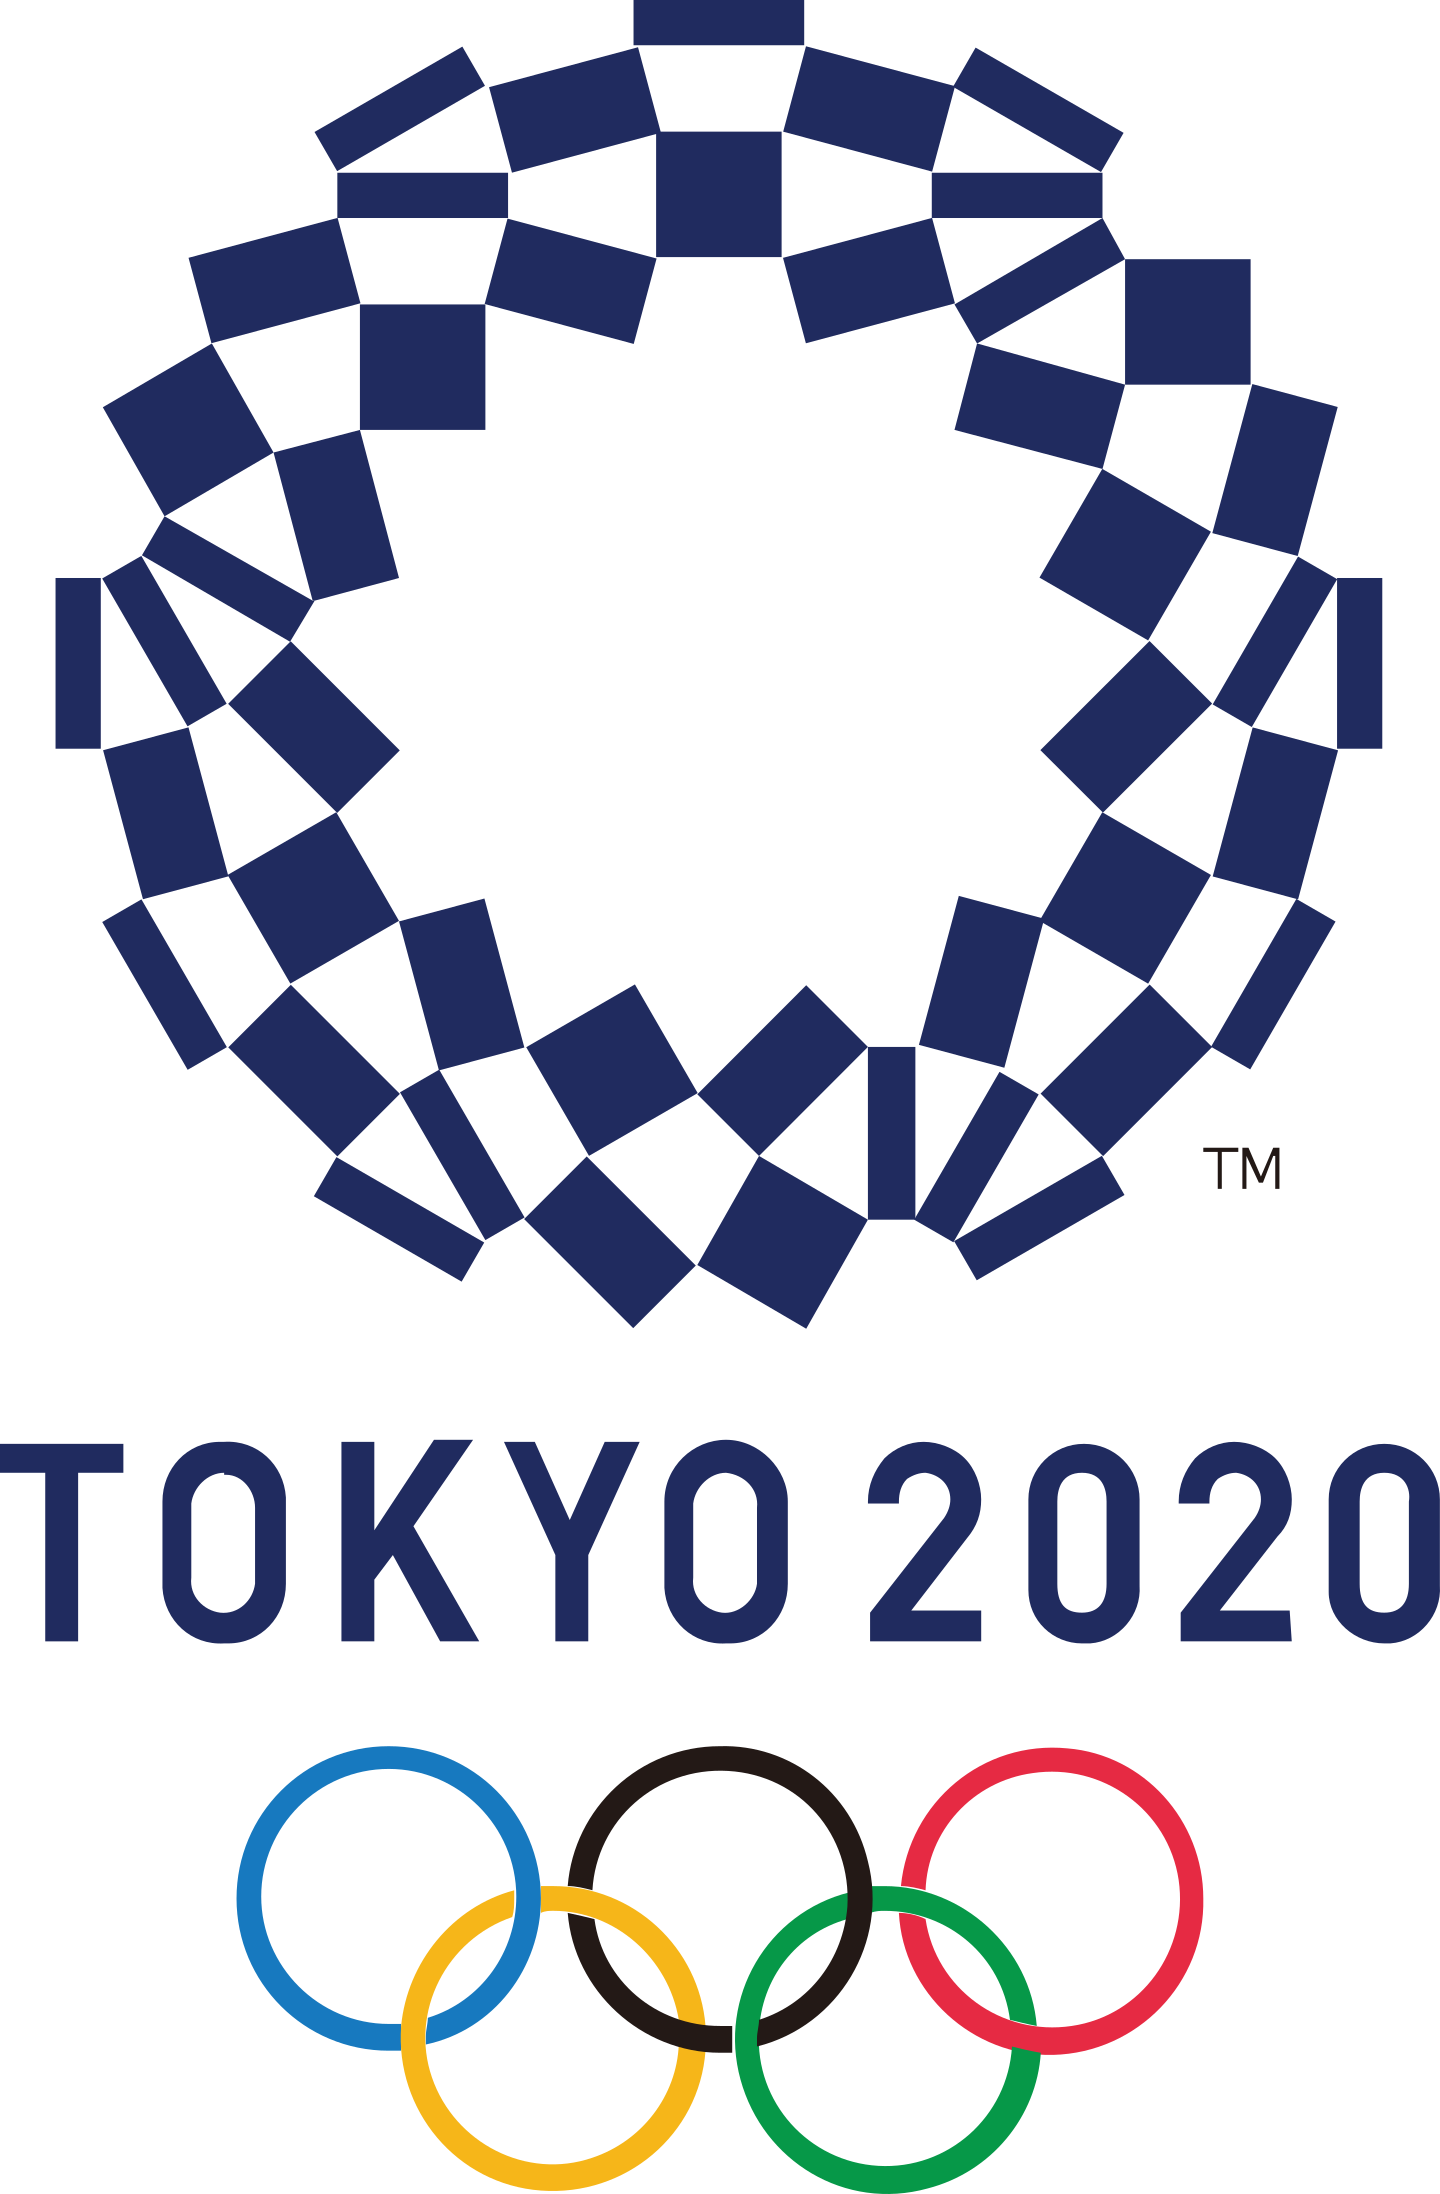 tokyo 2020 logo 2 - Tokyo 2020 Logo